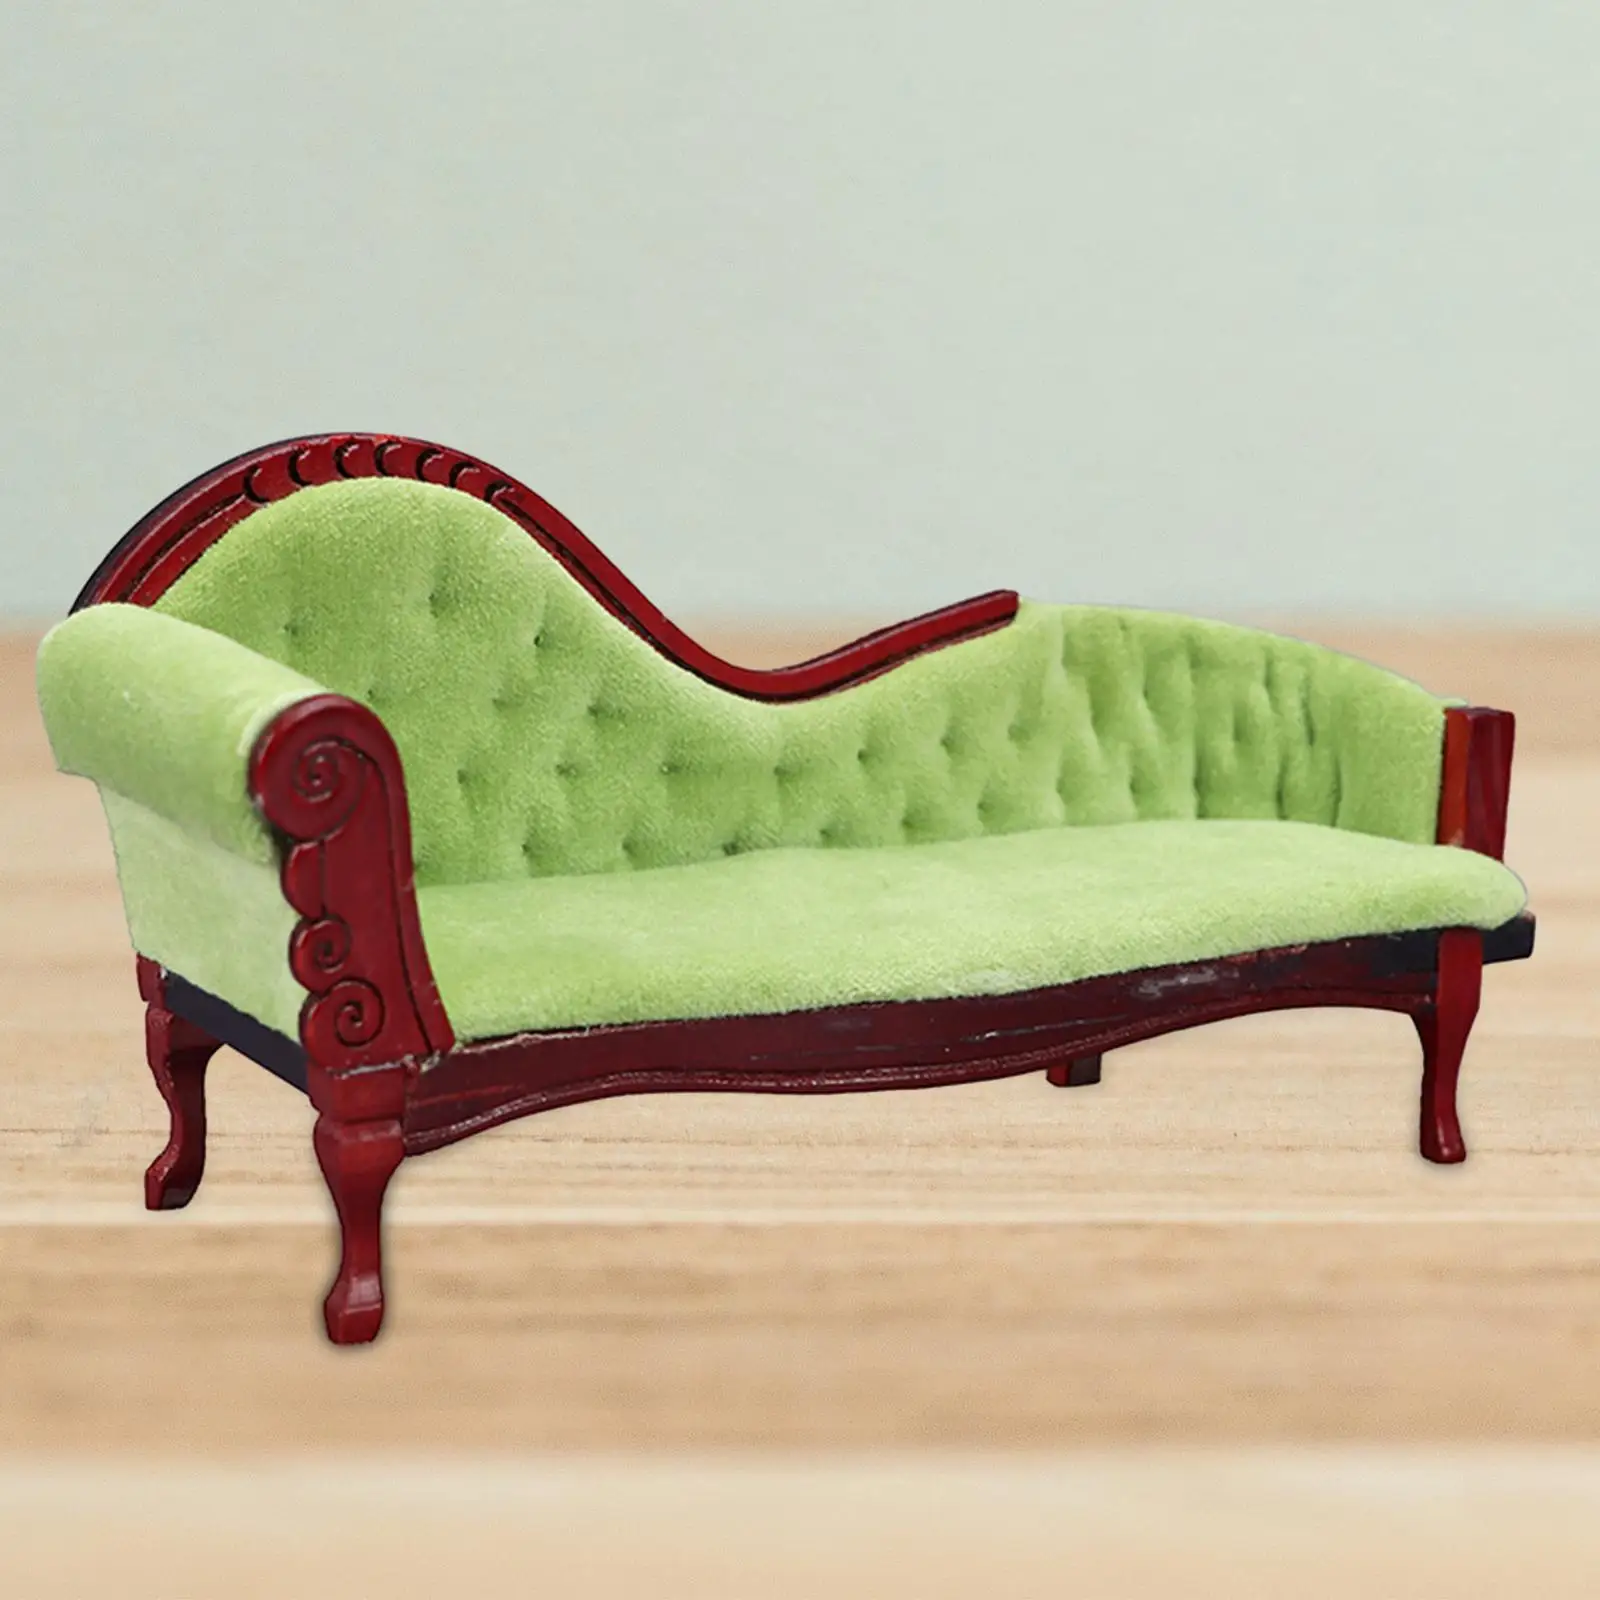 Simulation Dollhouse Furniture 1:12 Doll House Mini Sofa for Micro Landscape Pretend Play Photo Props Diorama DIY Projects